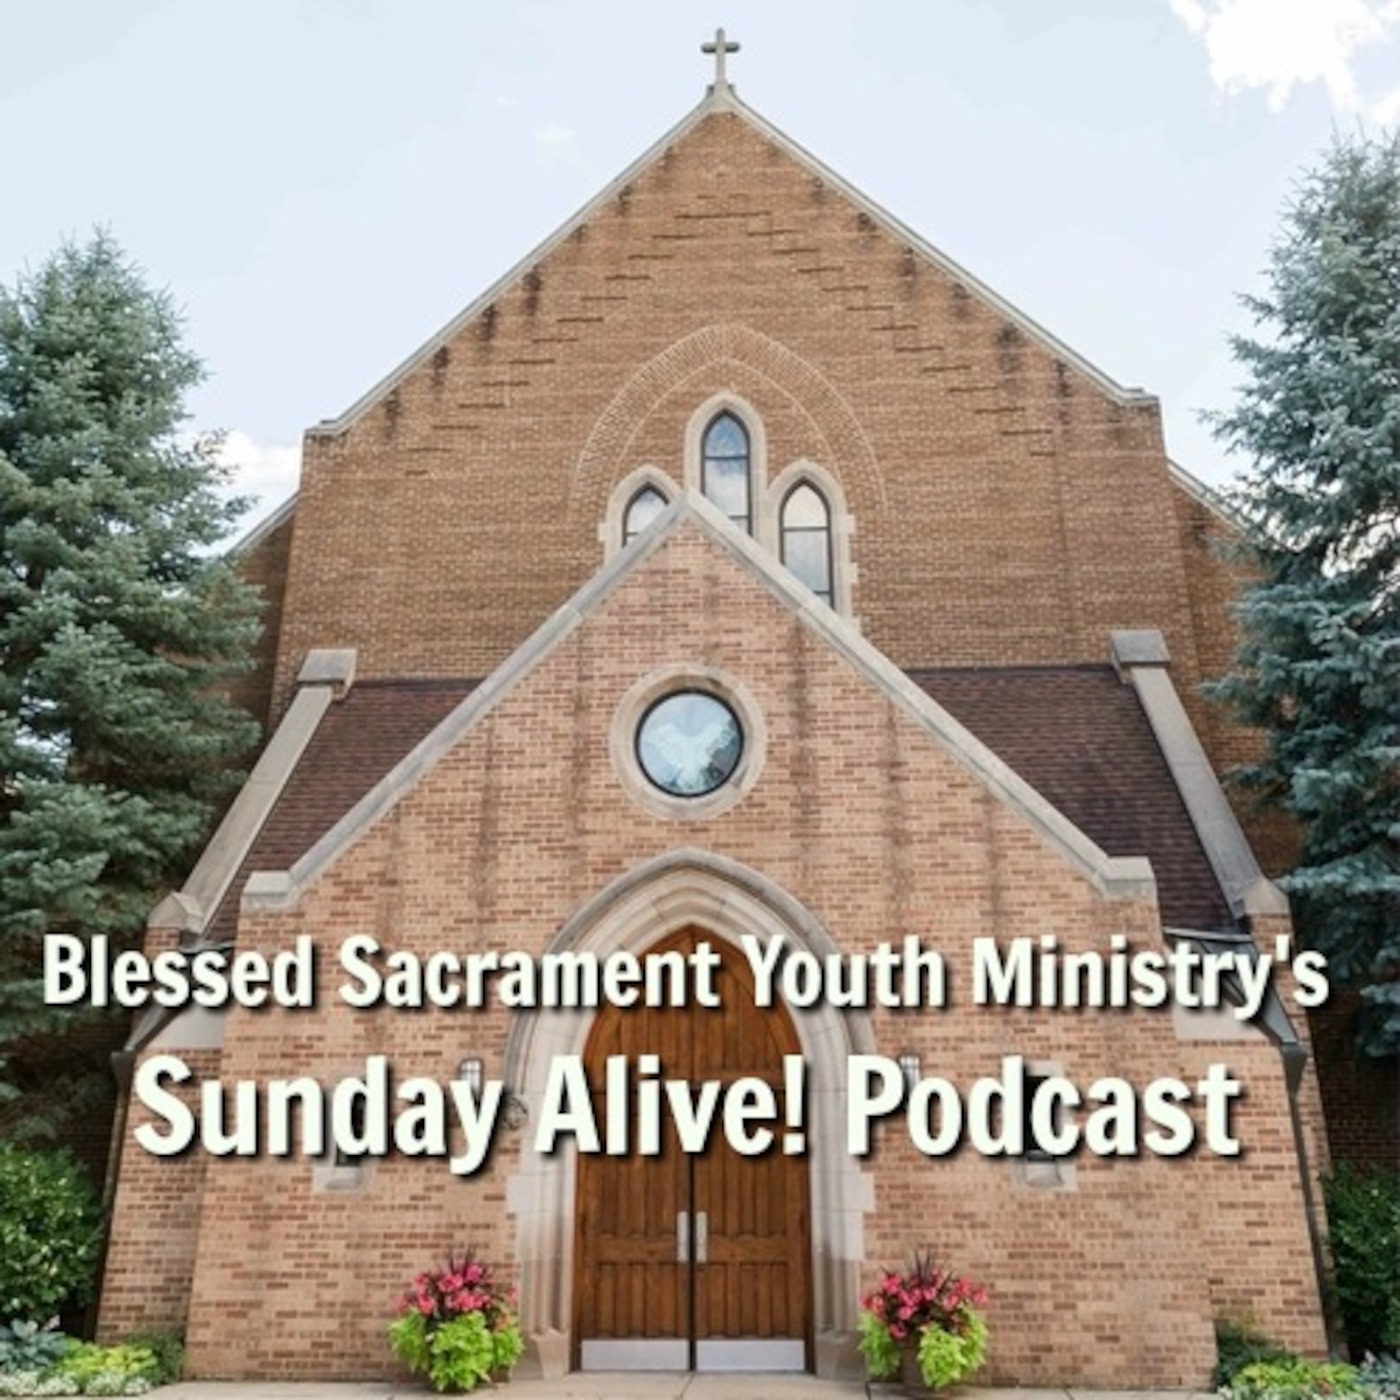 The Sunday Alive Podcast - Sunday, May 31, 2020 - Pentecost Sunday!